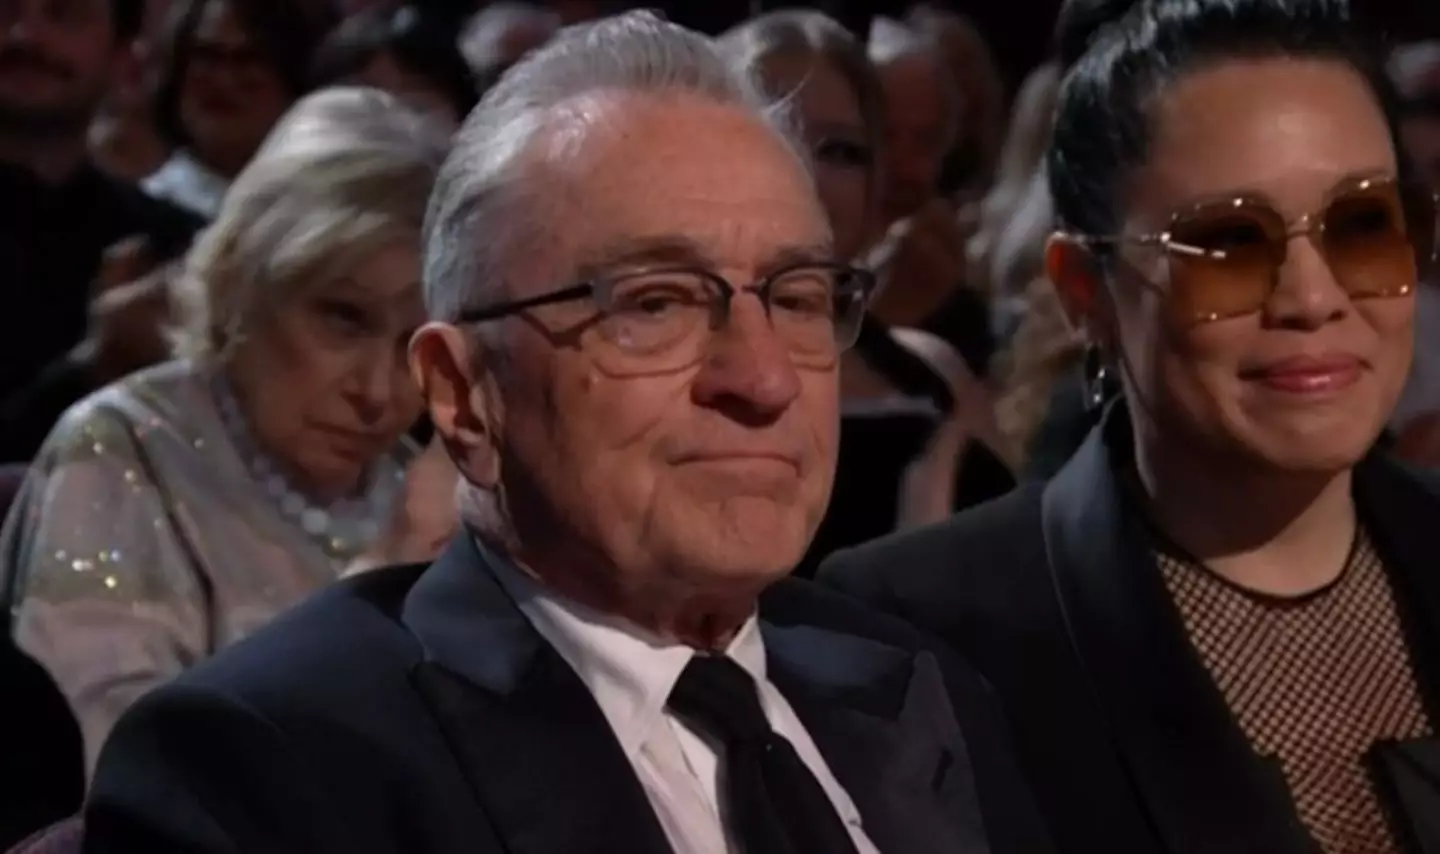 Robert De Niro's relationship was mocked at the Academy Awards.